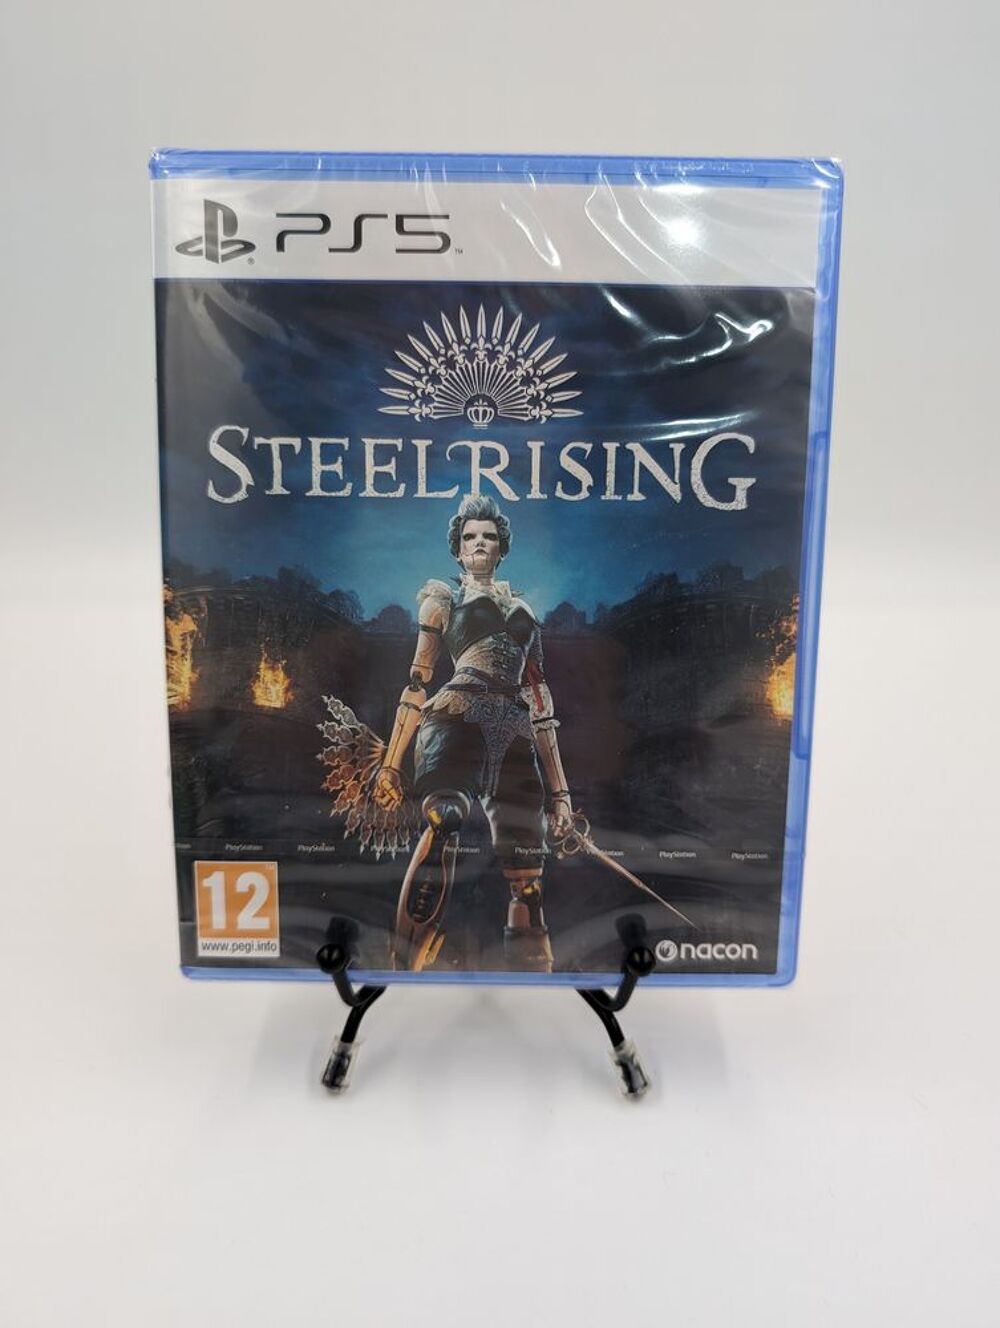 Jeu PS5 Playstation 5 Steelrising neuf sous blister Consoles et jeux vidos